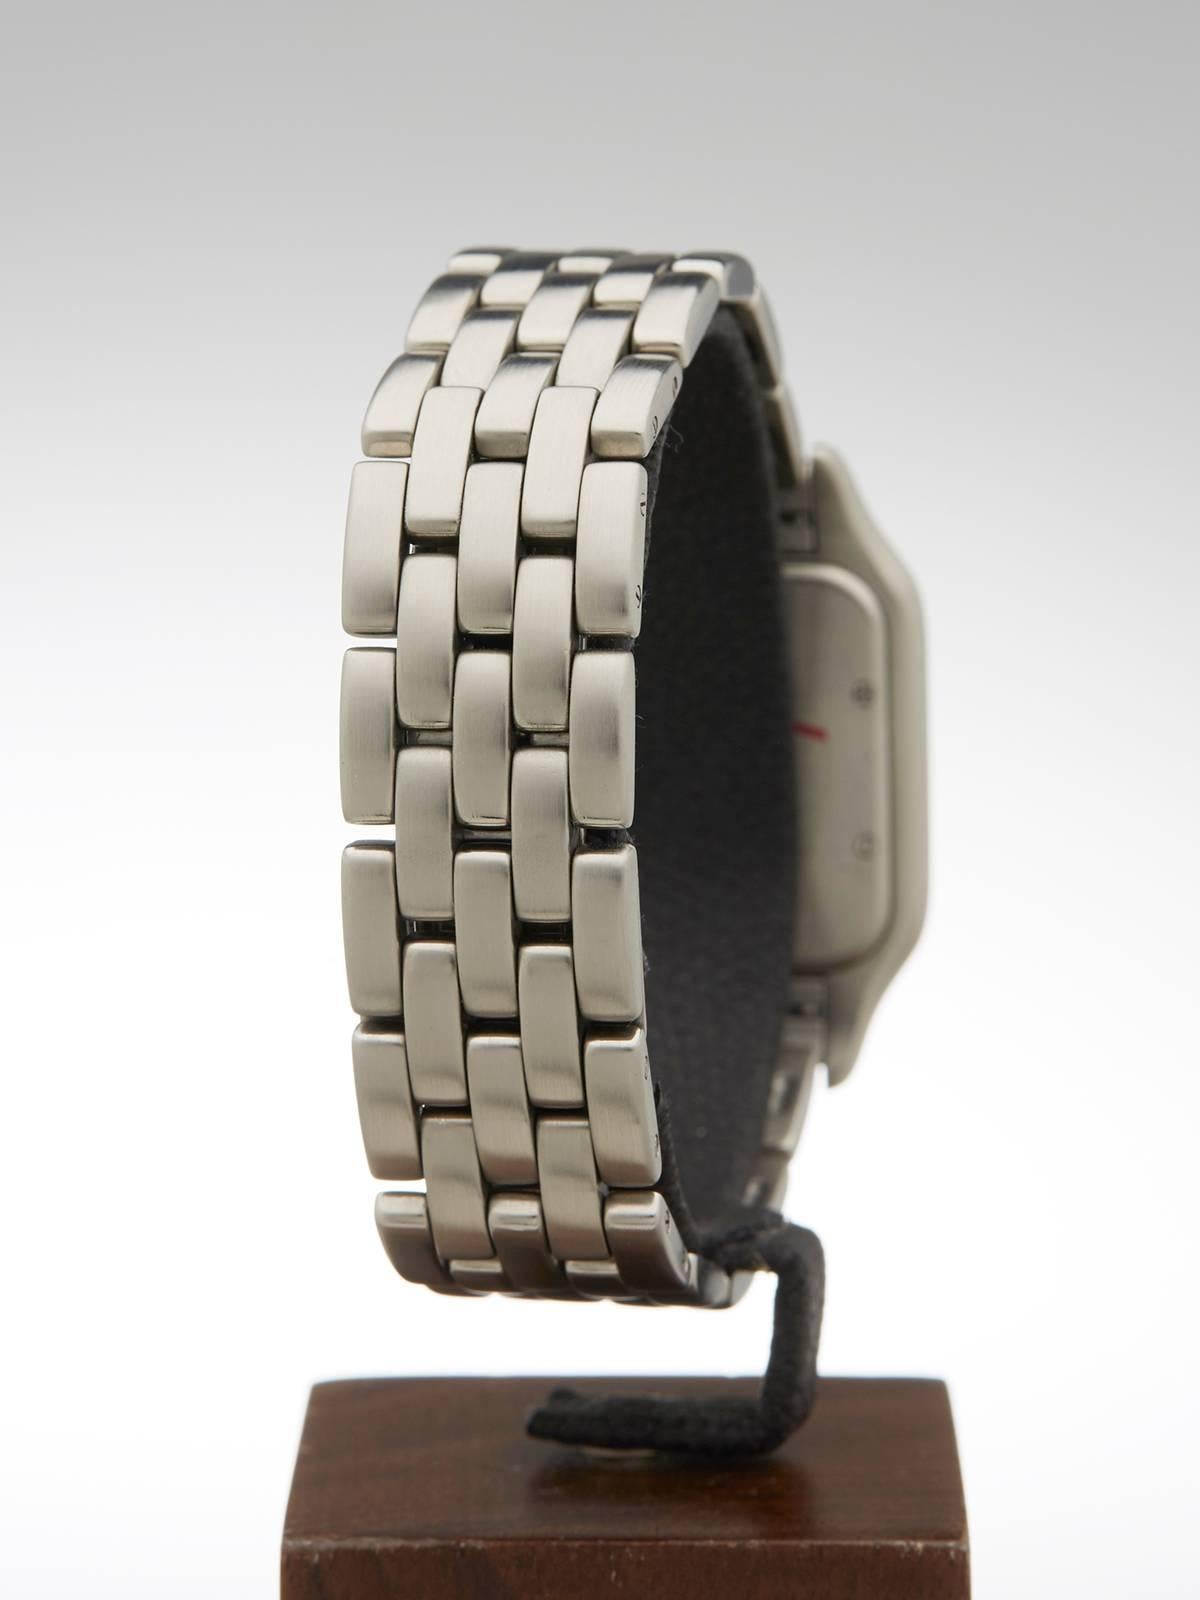  Cartier Stainless Steel White Dial Quartz Wristwatch 1300 2000s 4